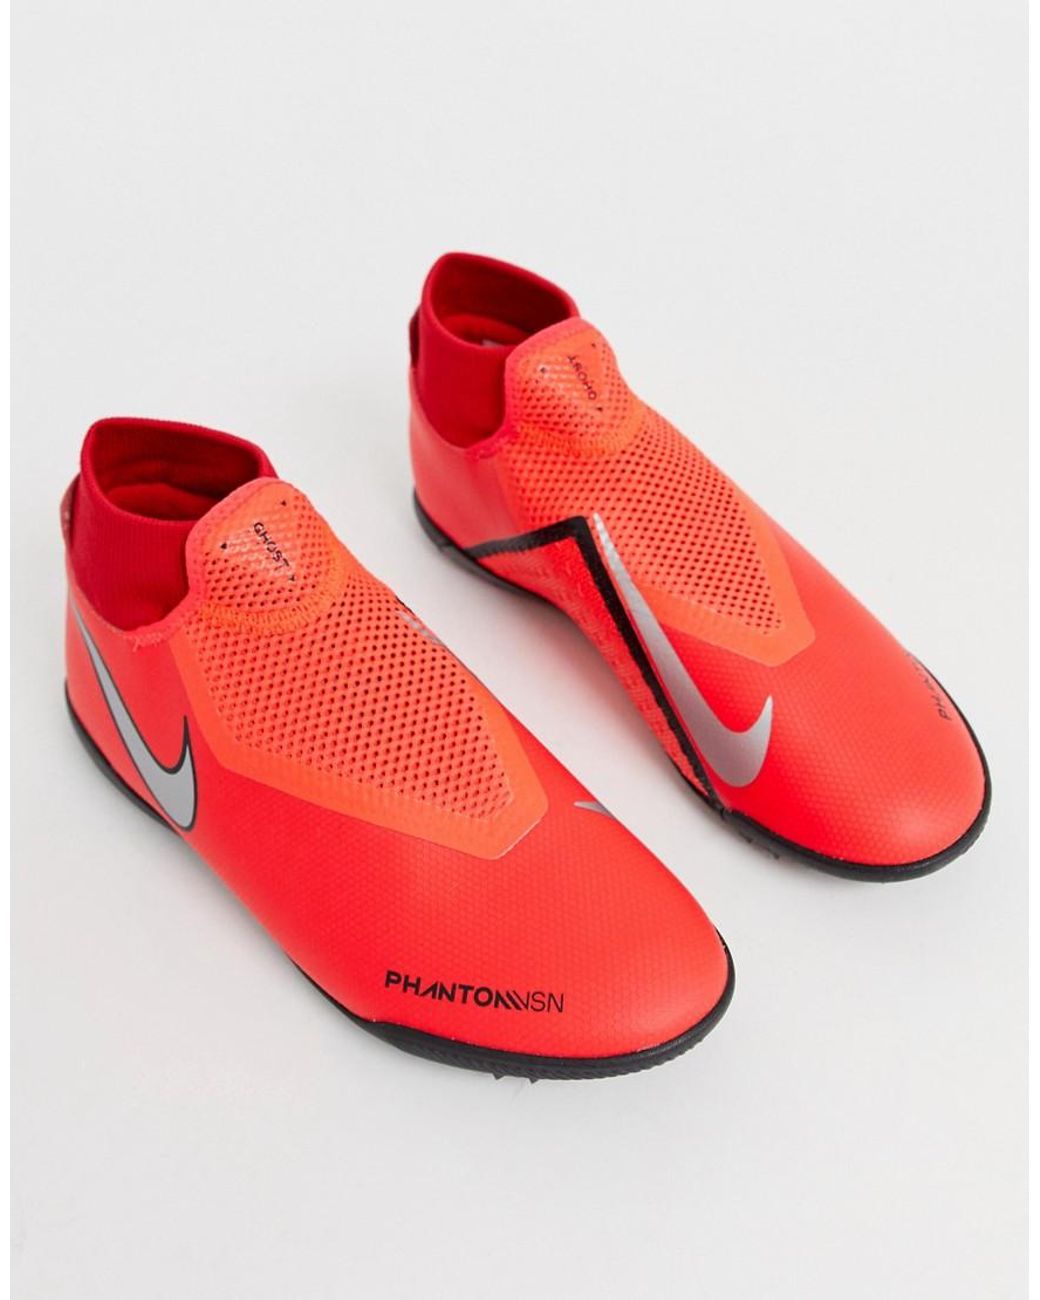 Nike Phantom Vision Astro Turf Boots in 